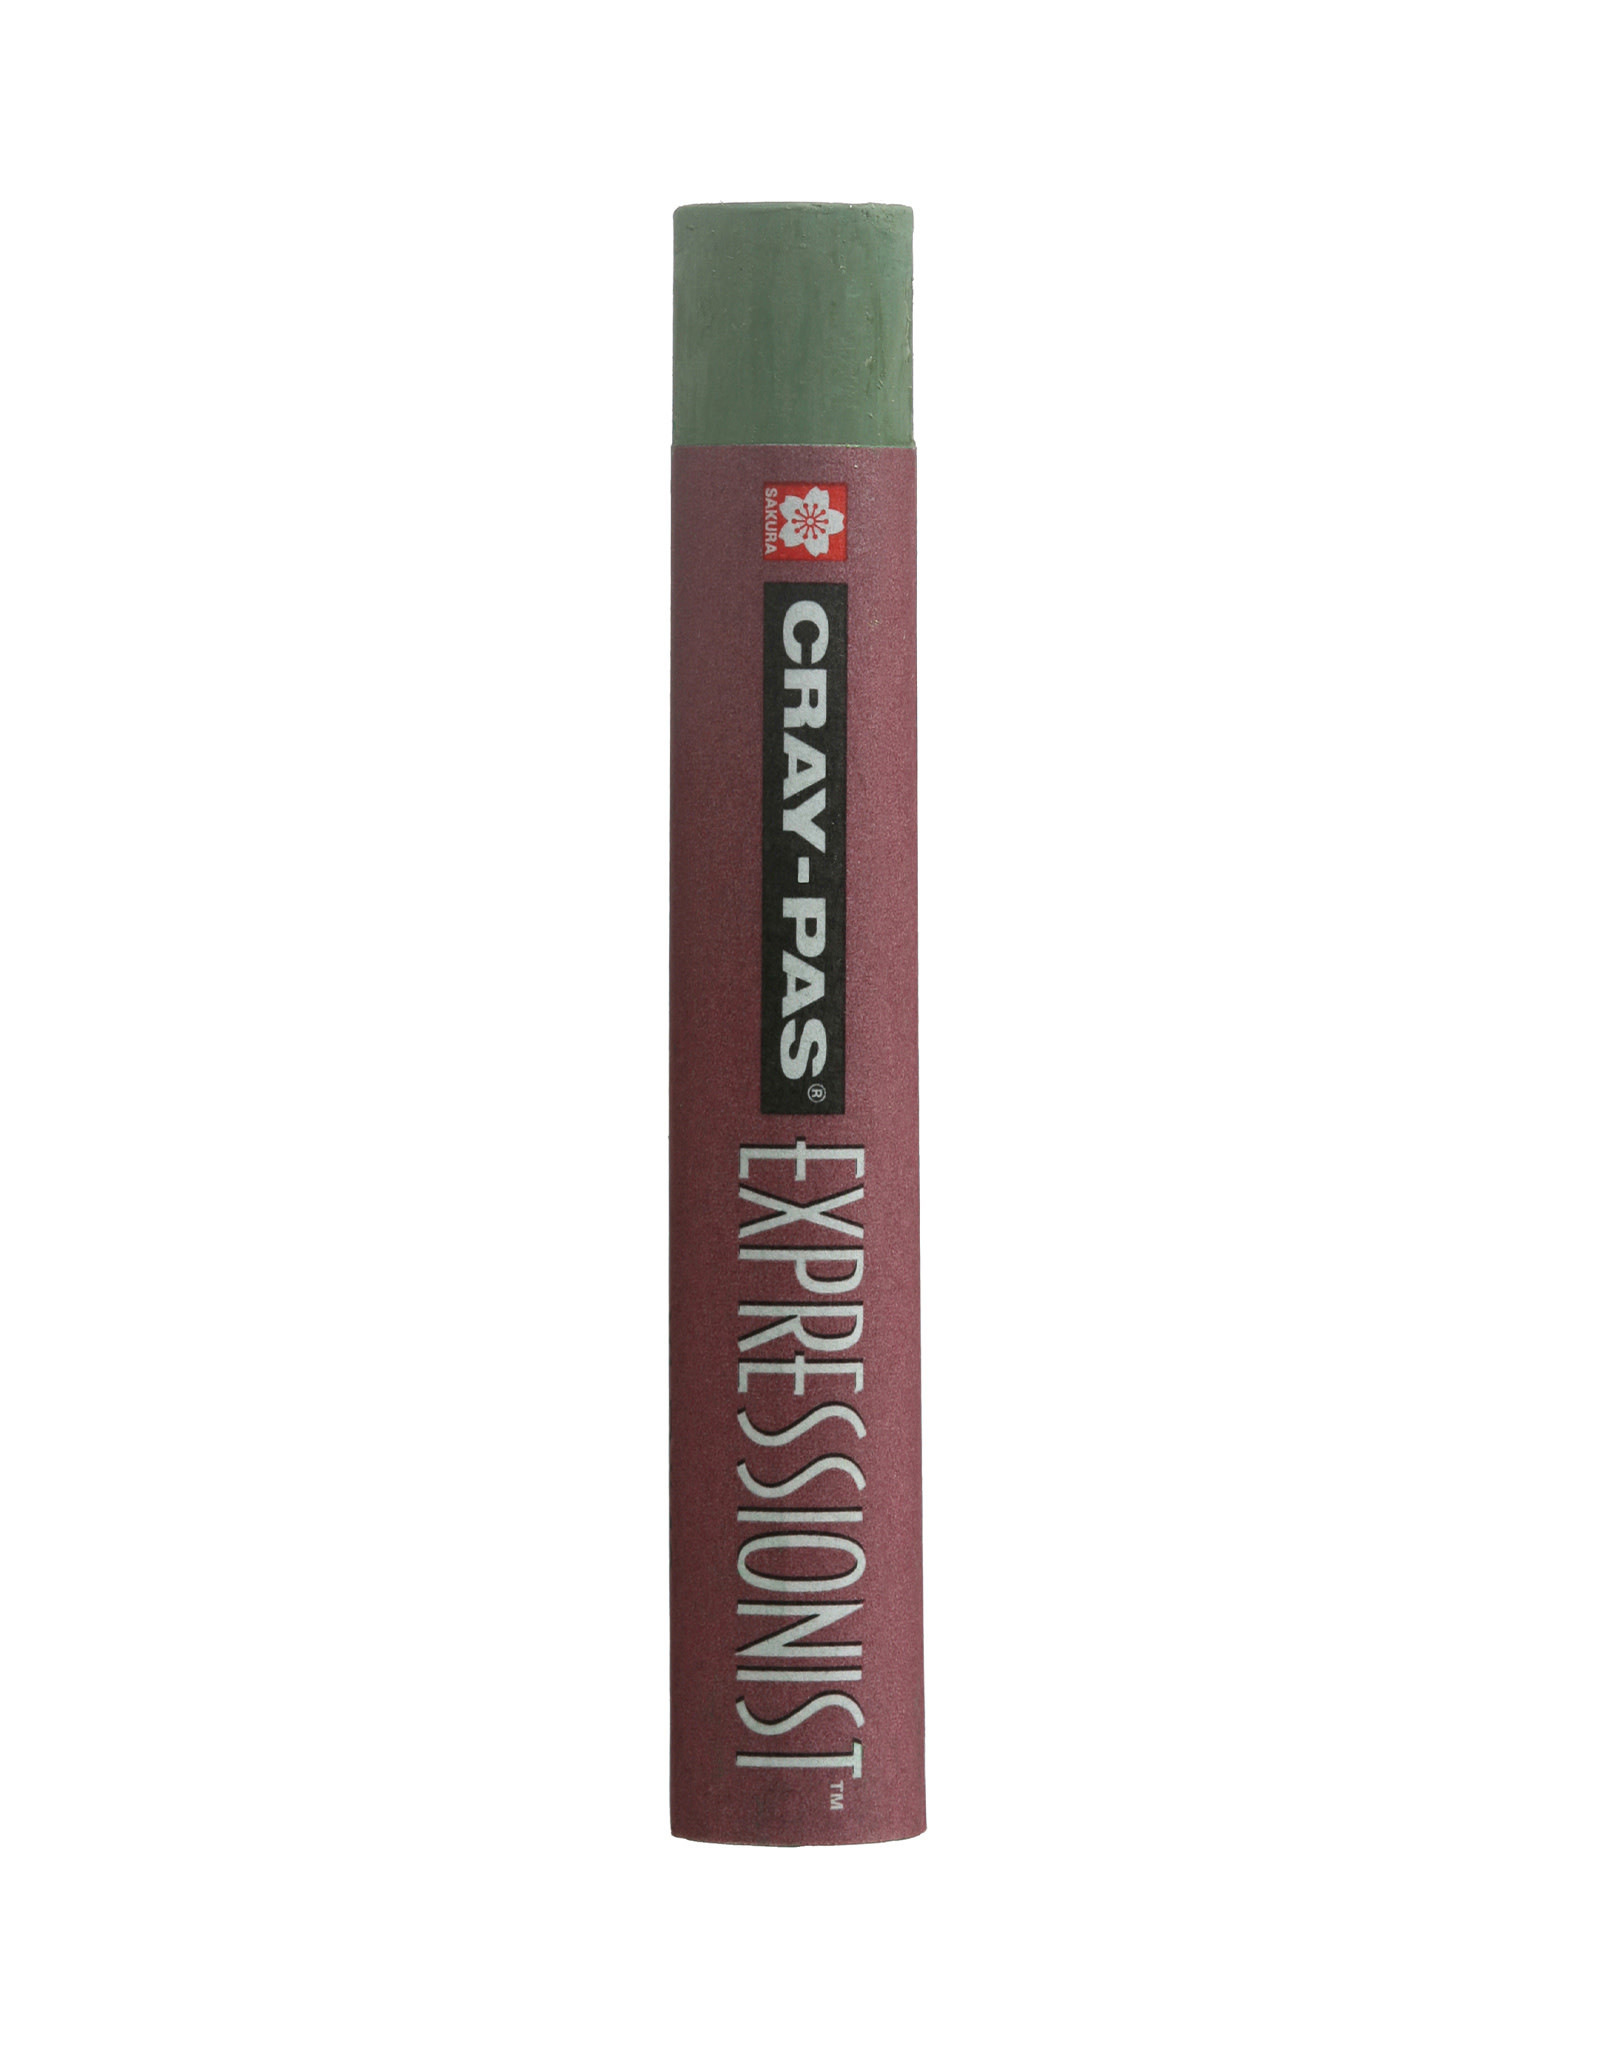 Sakura Cray-Pas Expressionist Oil Pastel, Green Gray